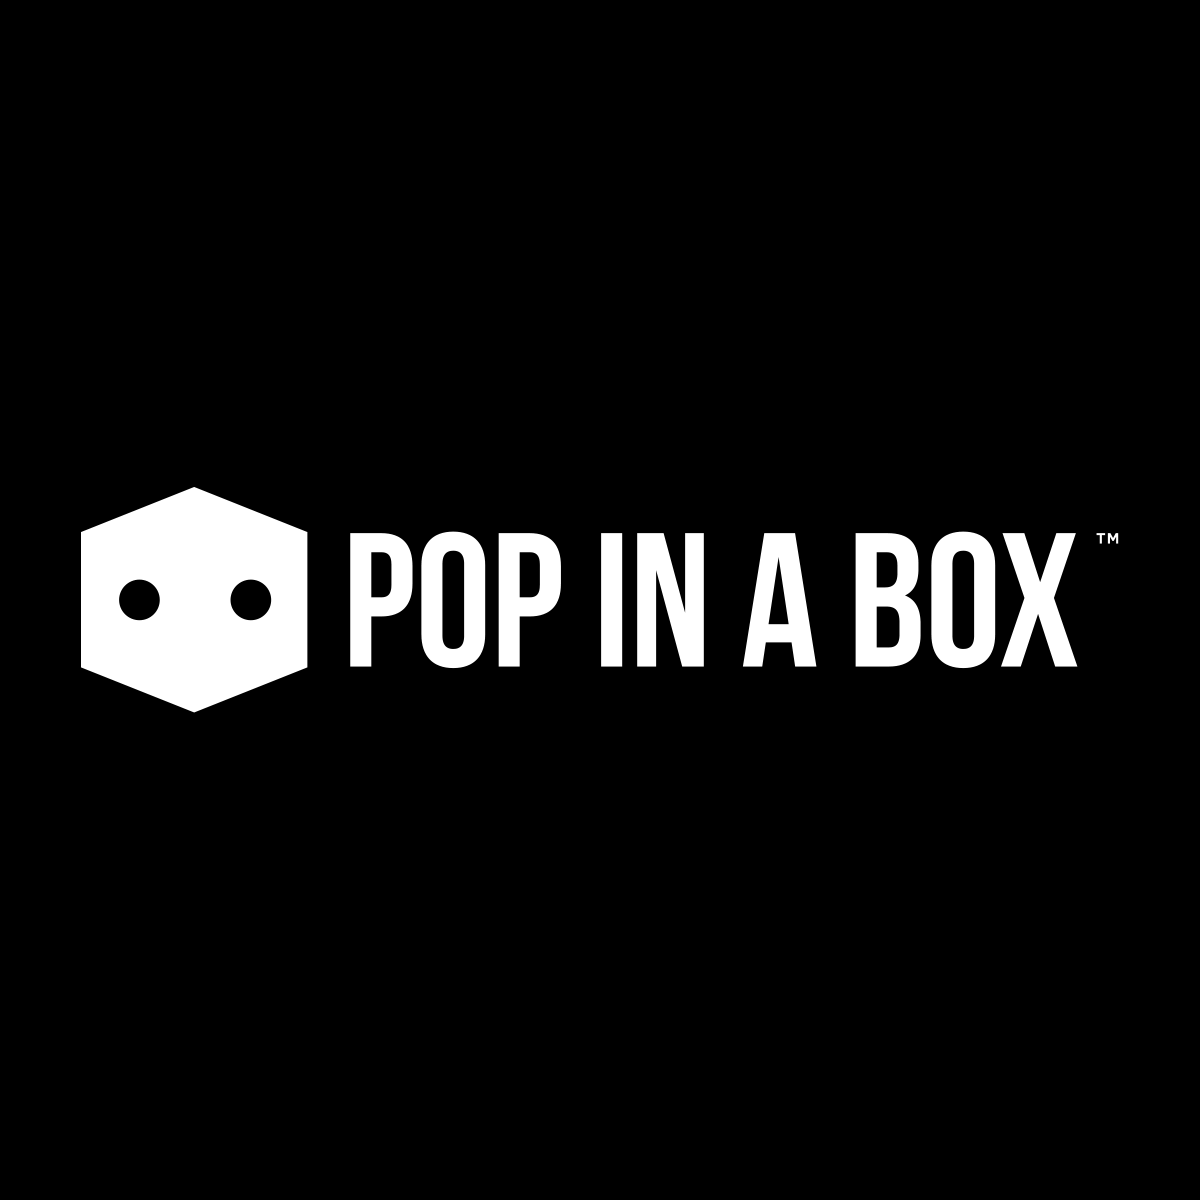 www.popinabox.ca